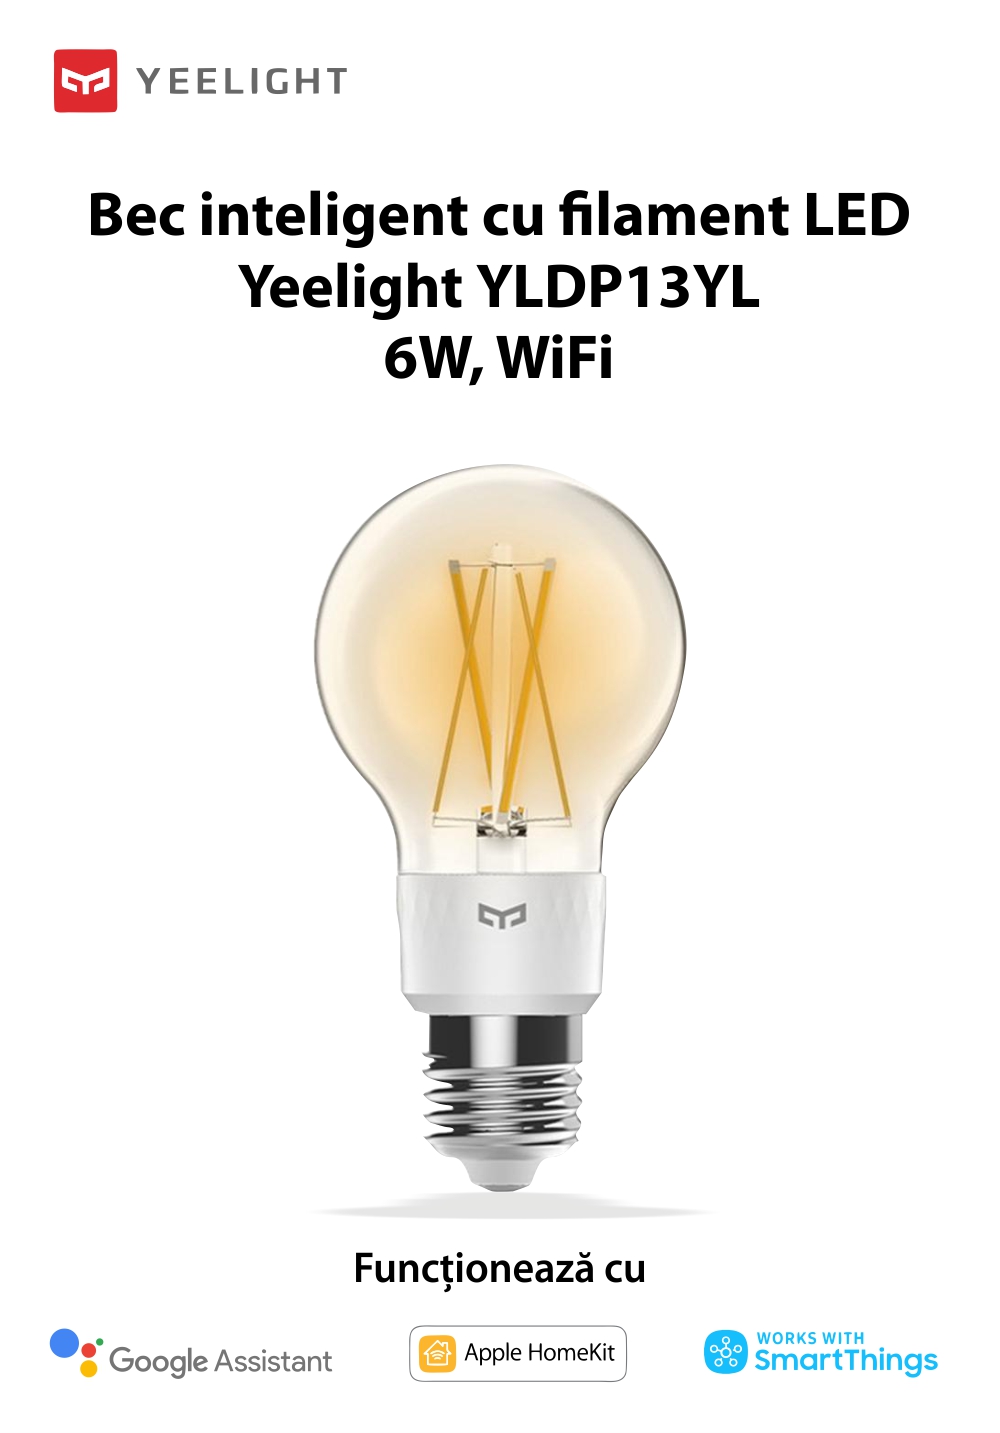 Bec inteligent cu filament LED, Yeelight YLDP12YL, Control smart, 6W, Wi-Fi, 2.4 GHz